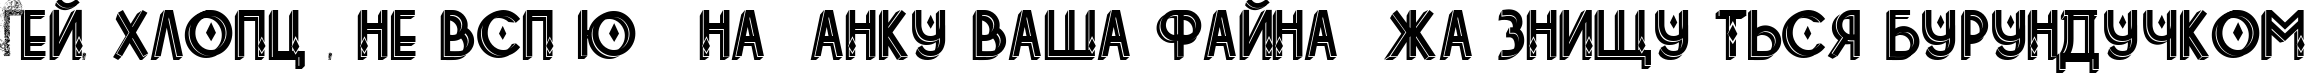 Пример написания шрифтом tetradecorative текста на украинском